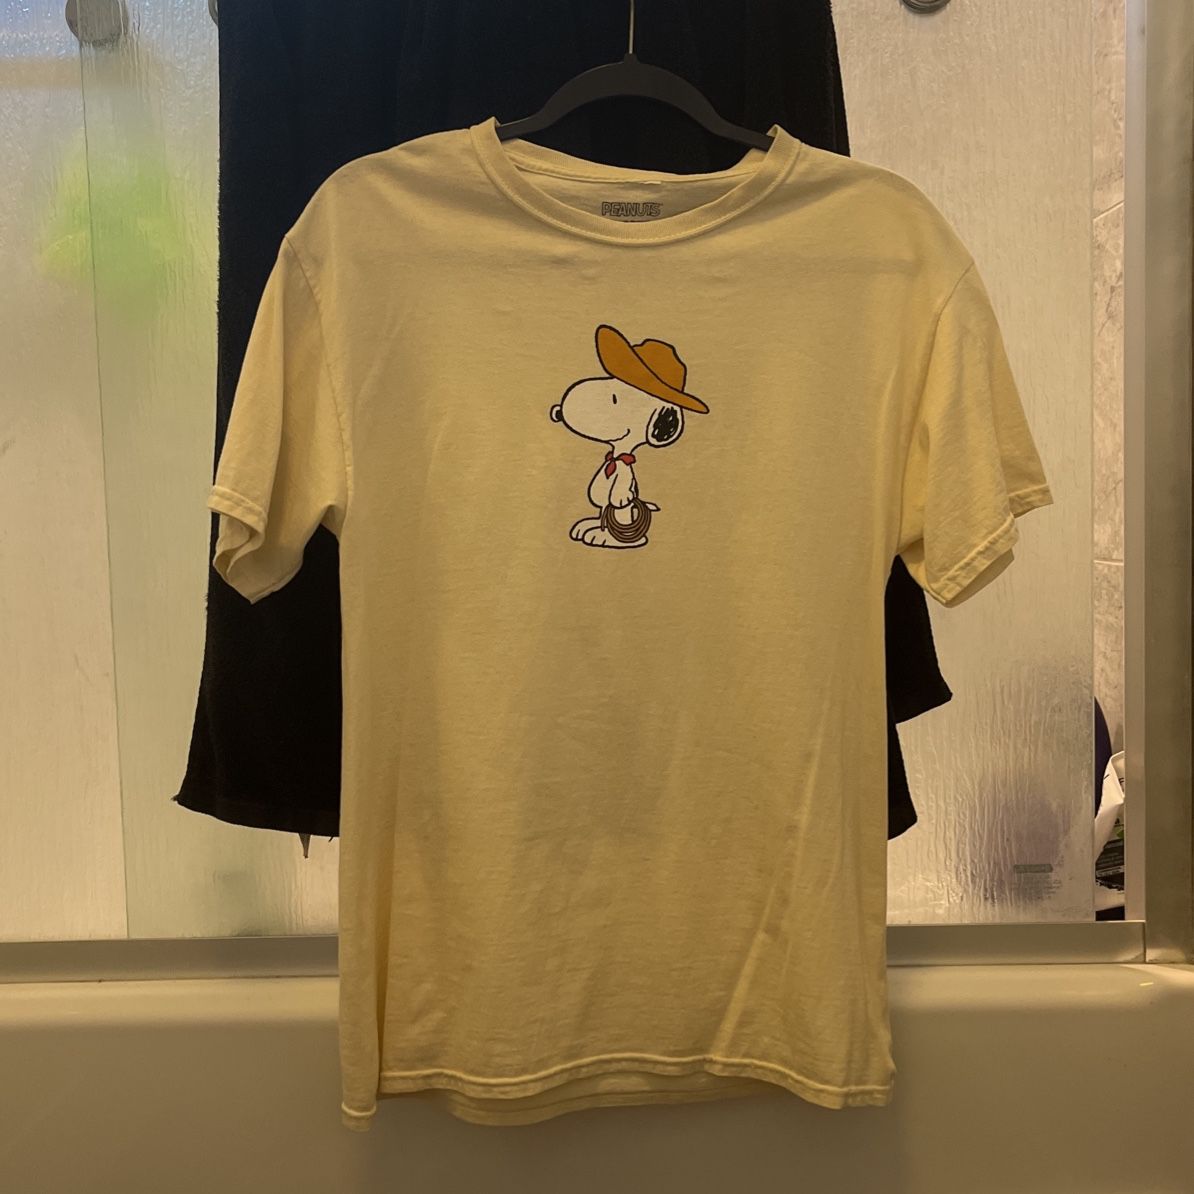 Snoopy shirt 